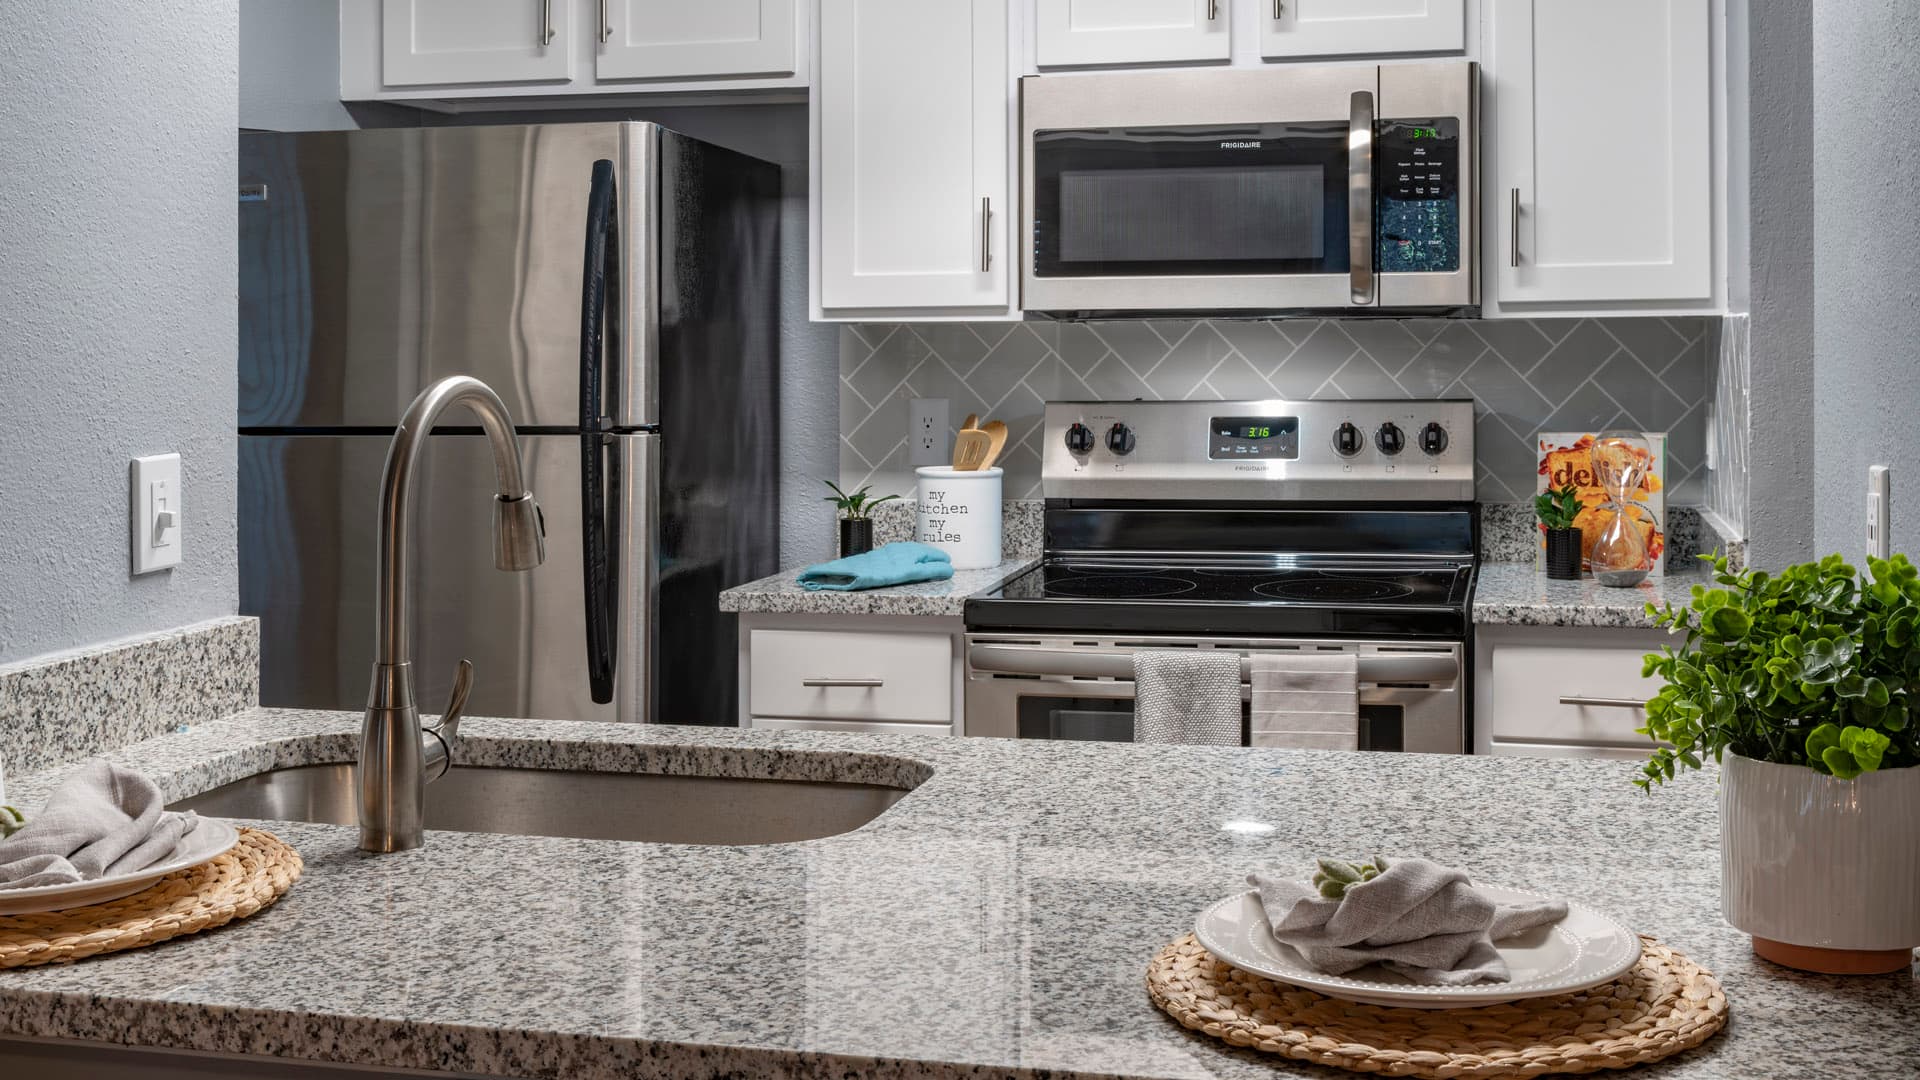 new quartz countertops, backsplash and stainless steel appliances in kitchen